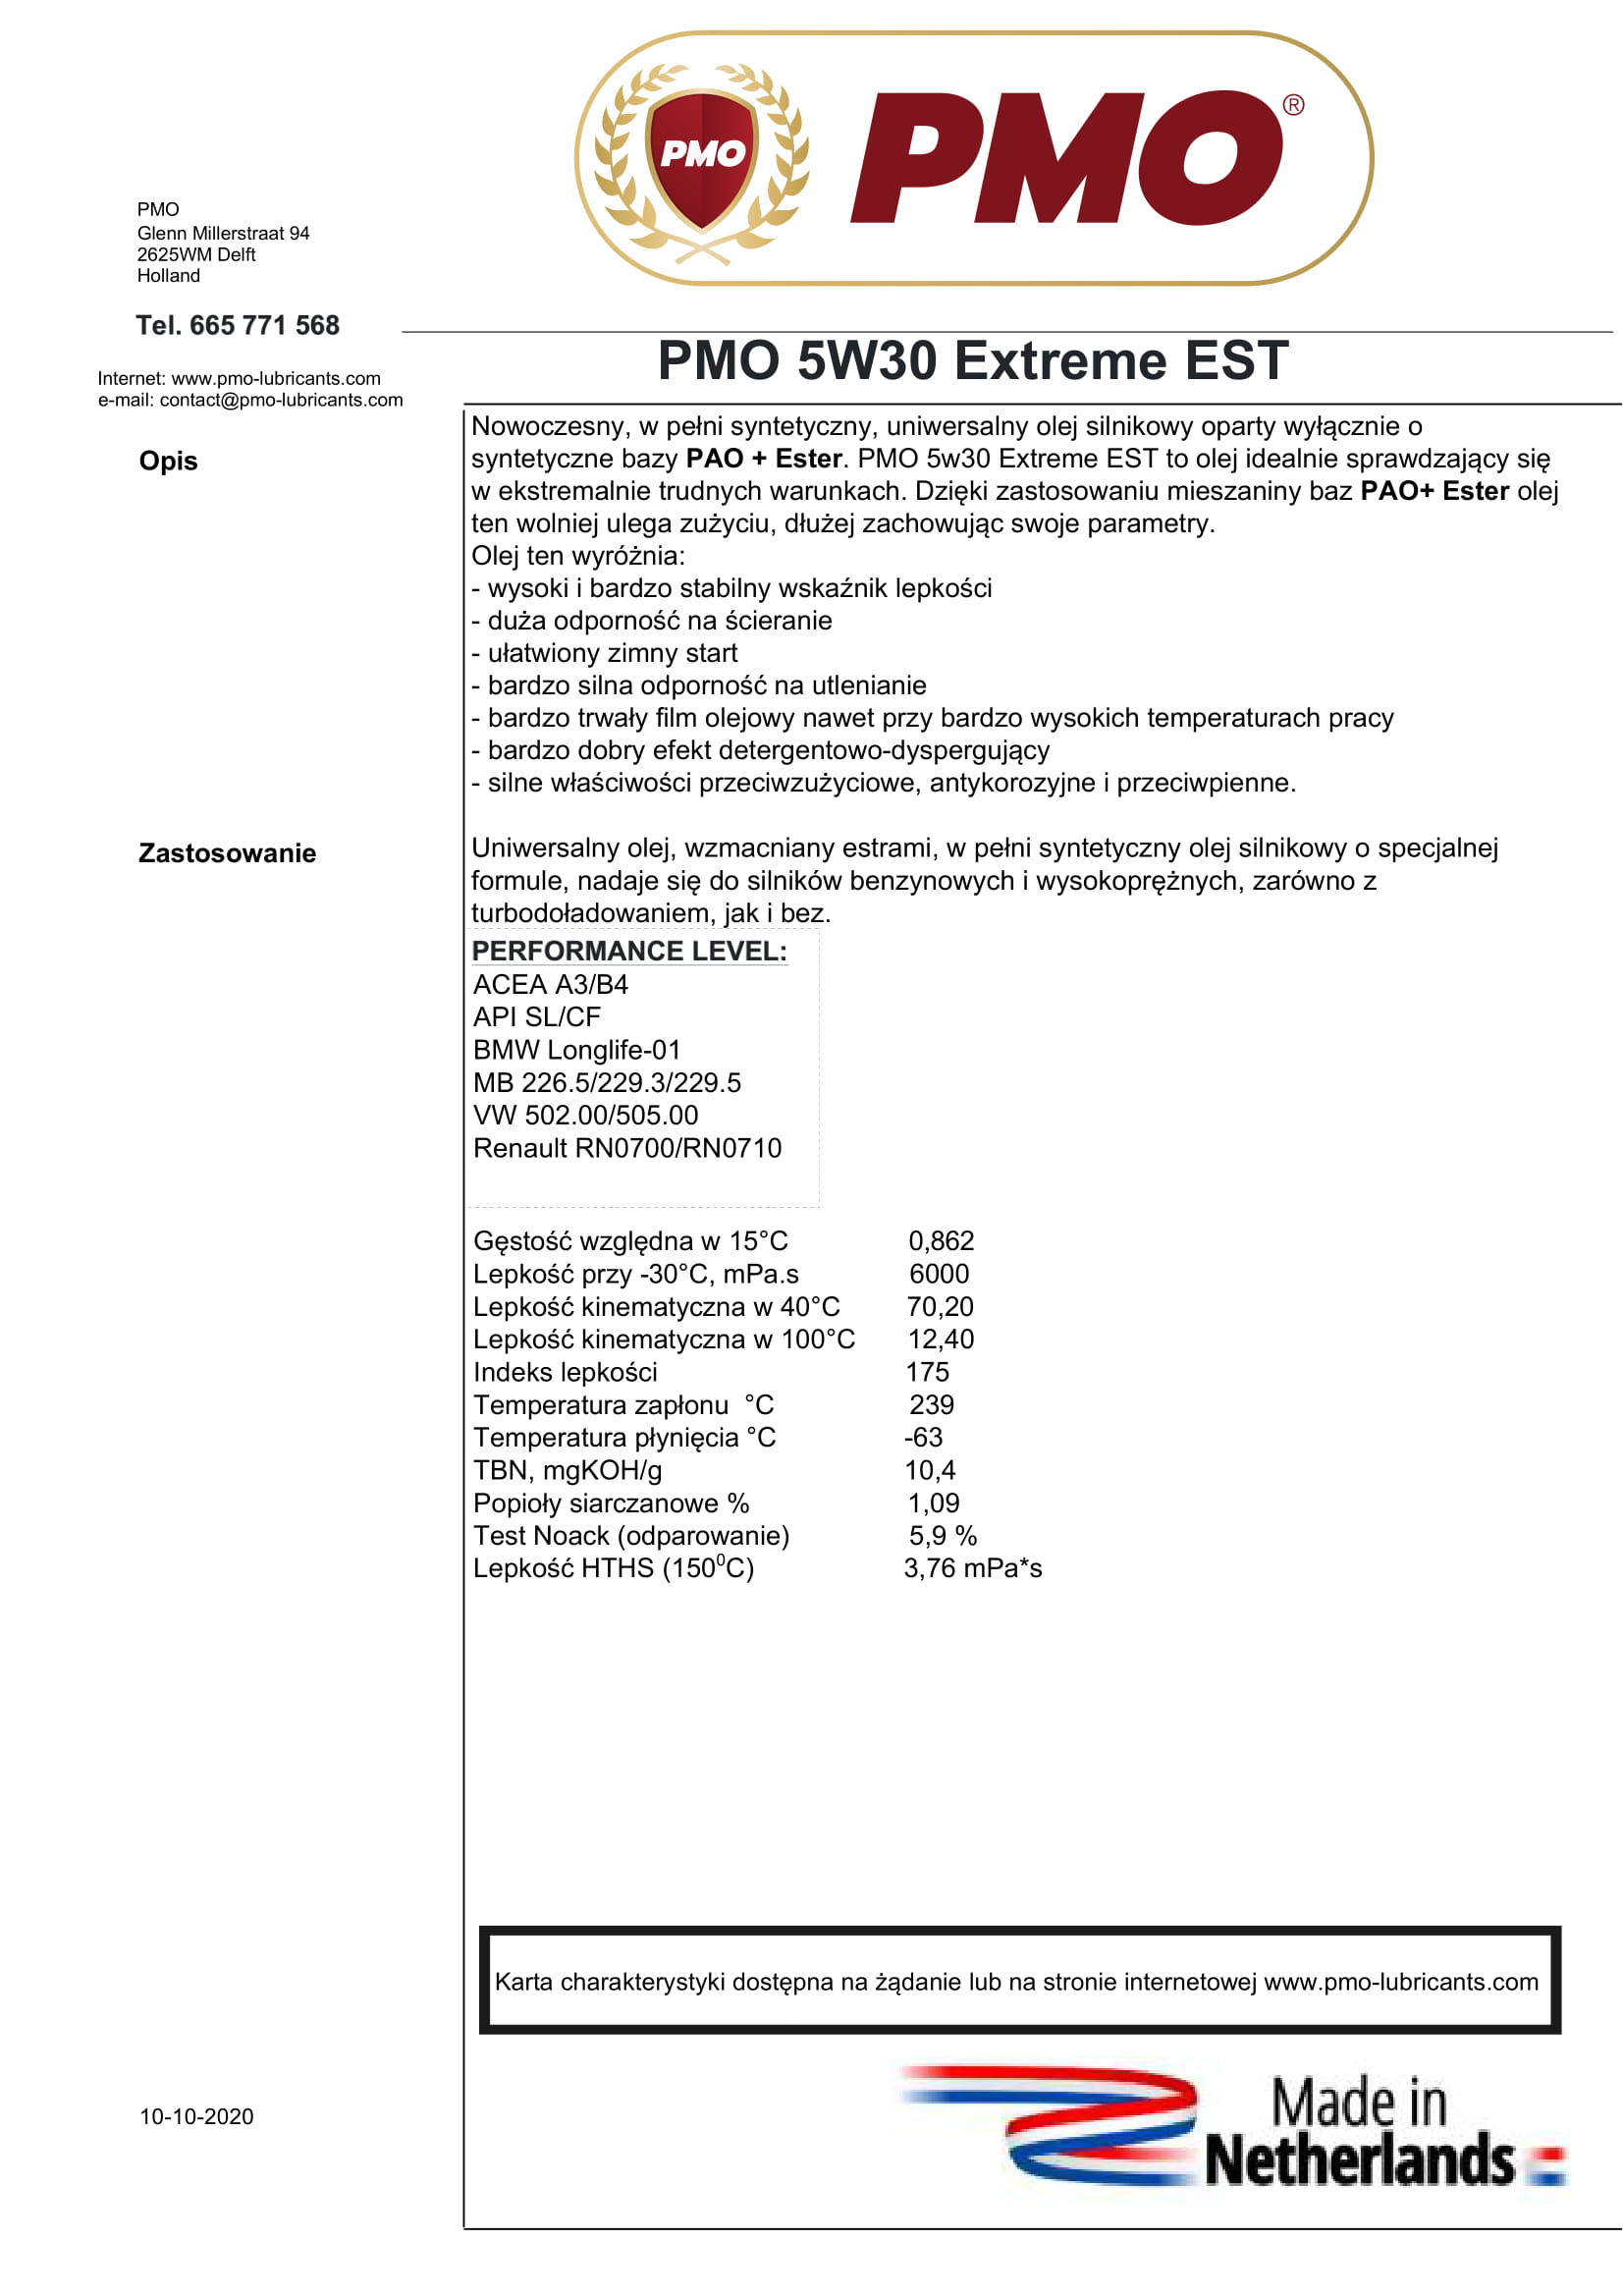 PMO-5w30 Extreme EST v-1.jpg